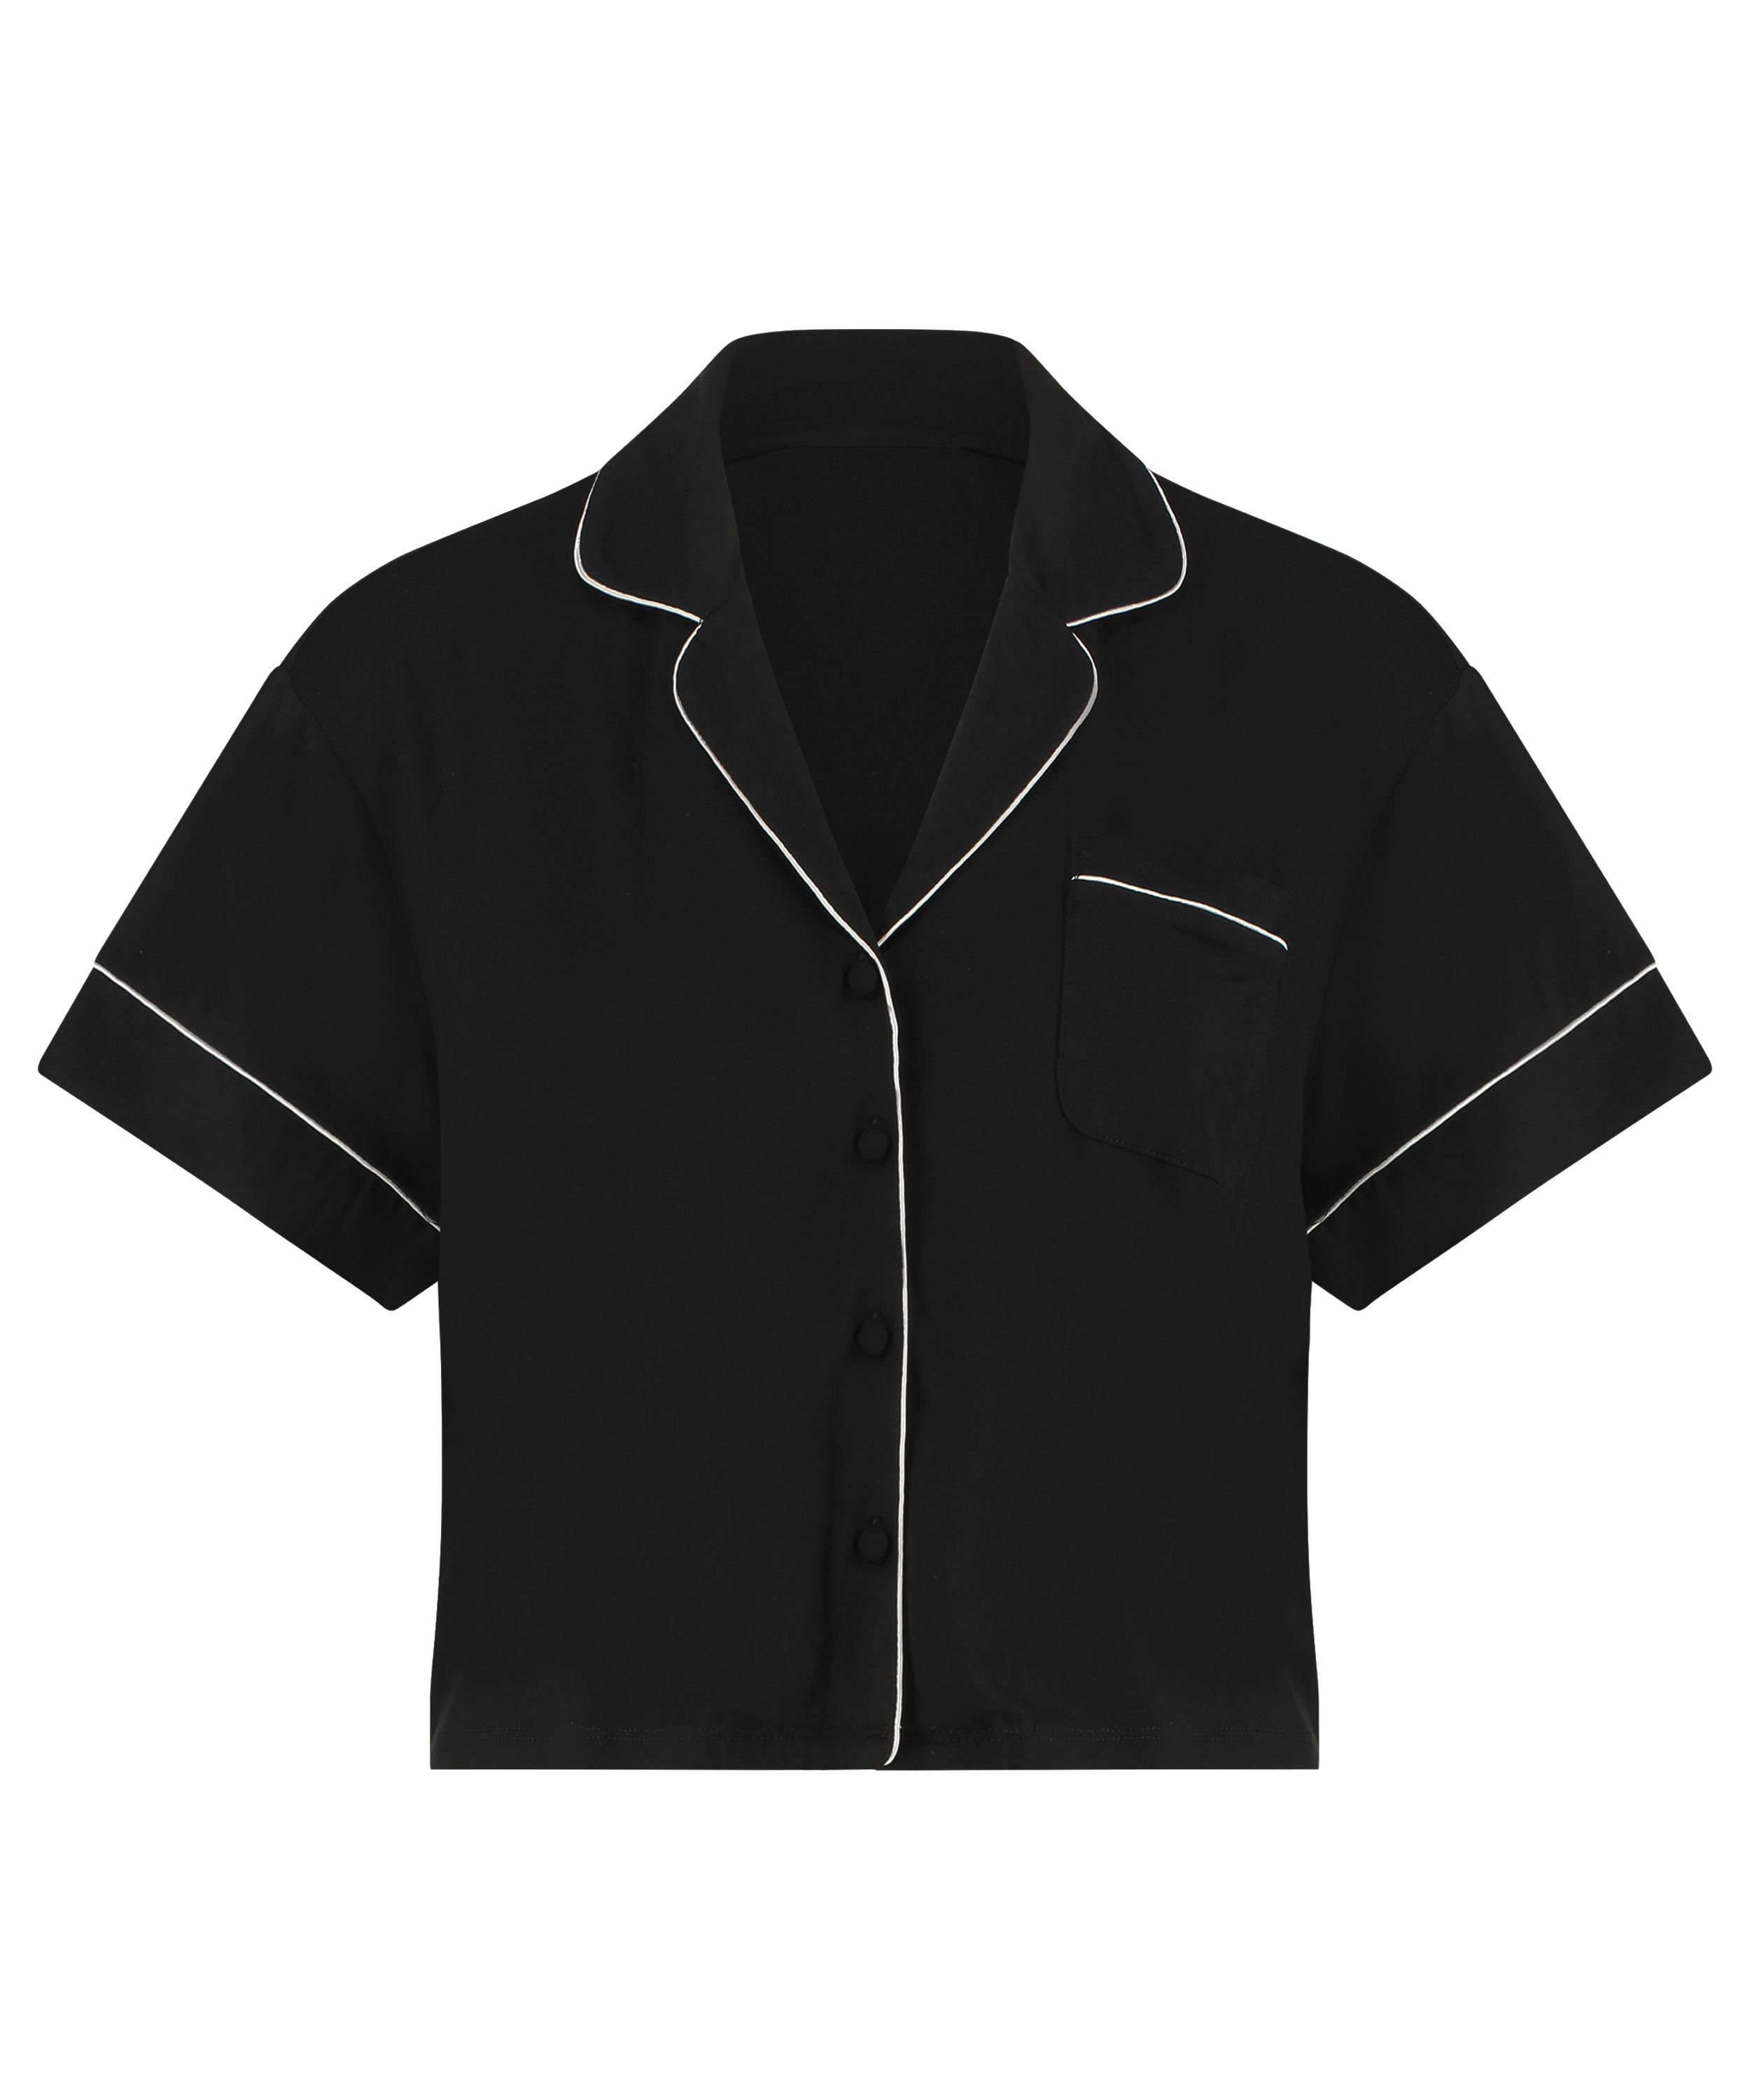 Essential Jersey Short-Sleeved Jacket, Black, main